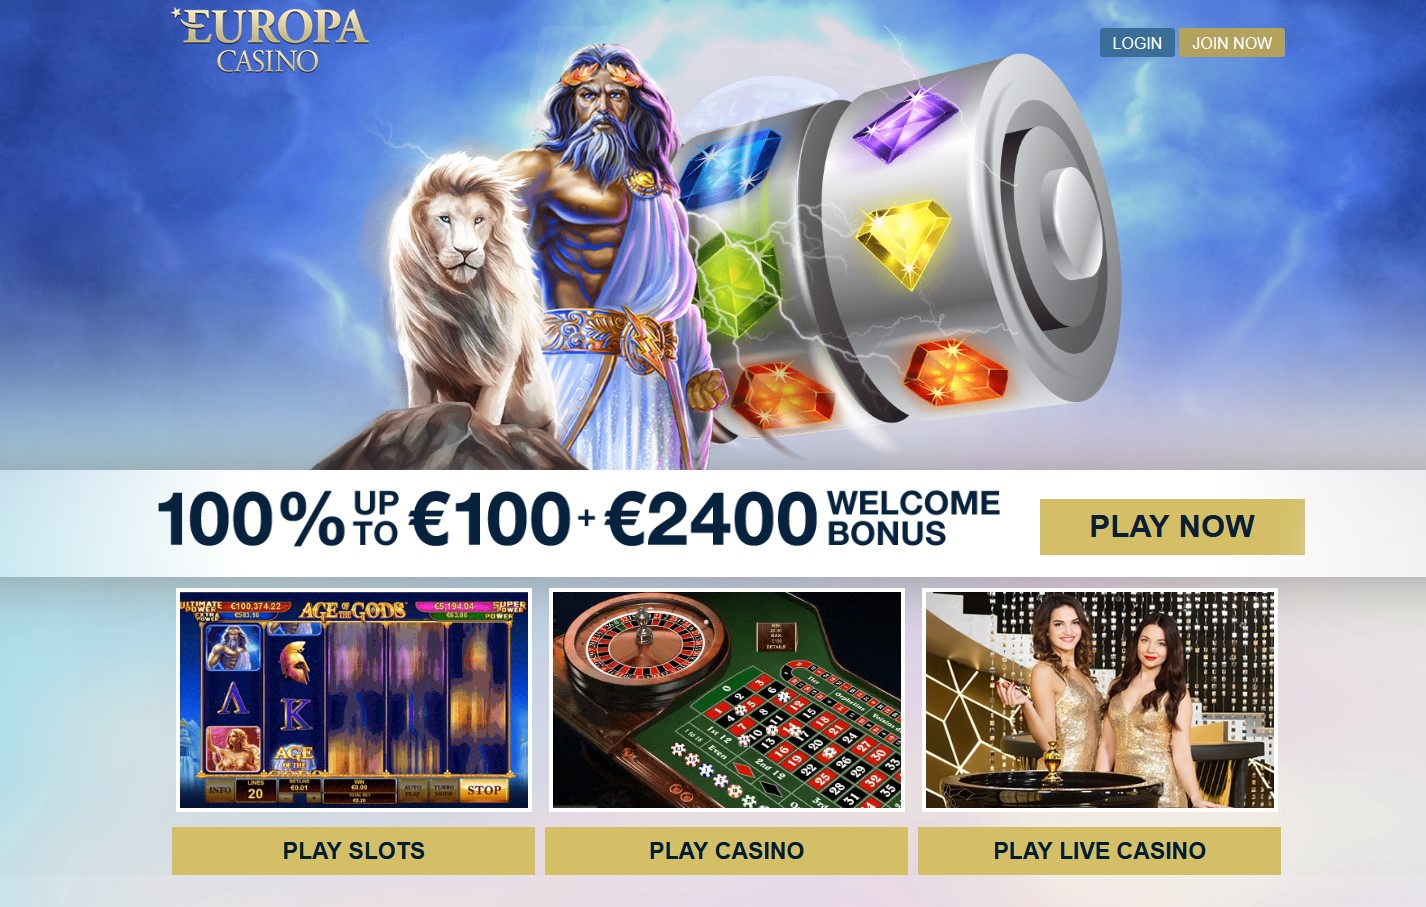 europa casino website homepage screenshot